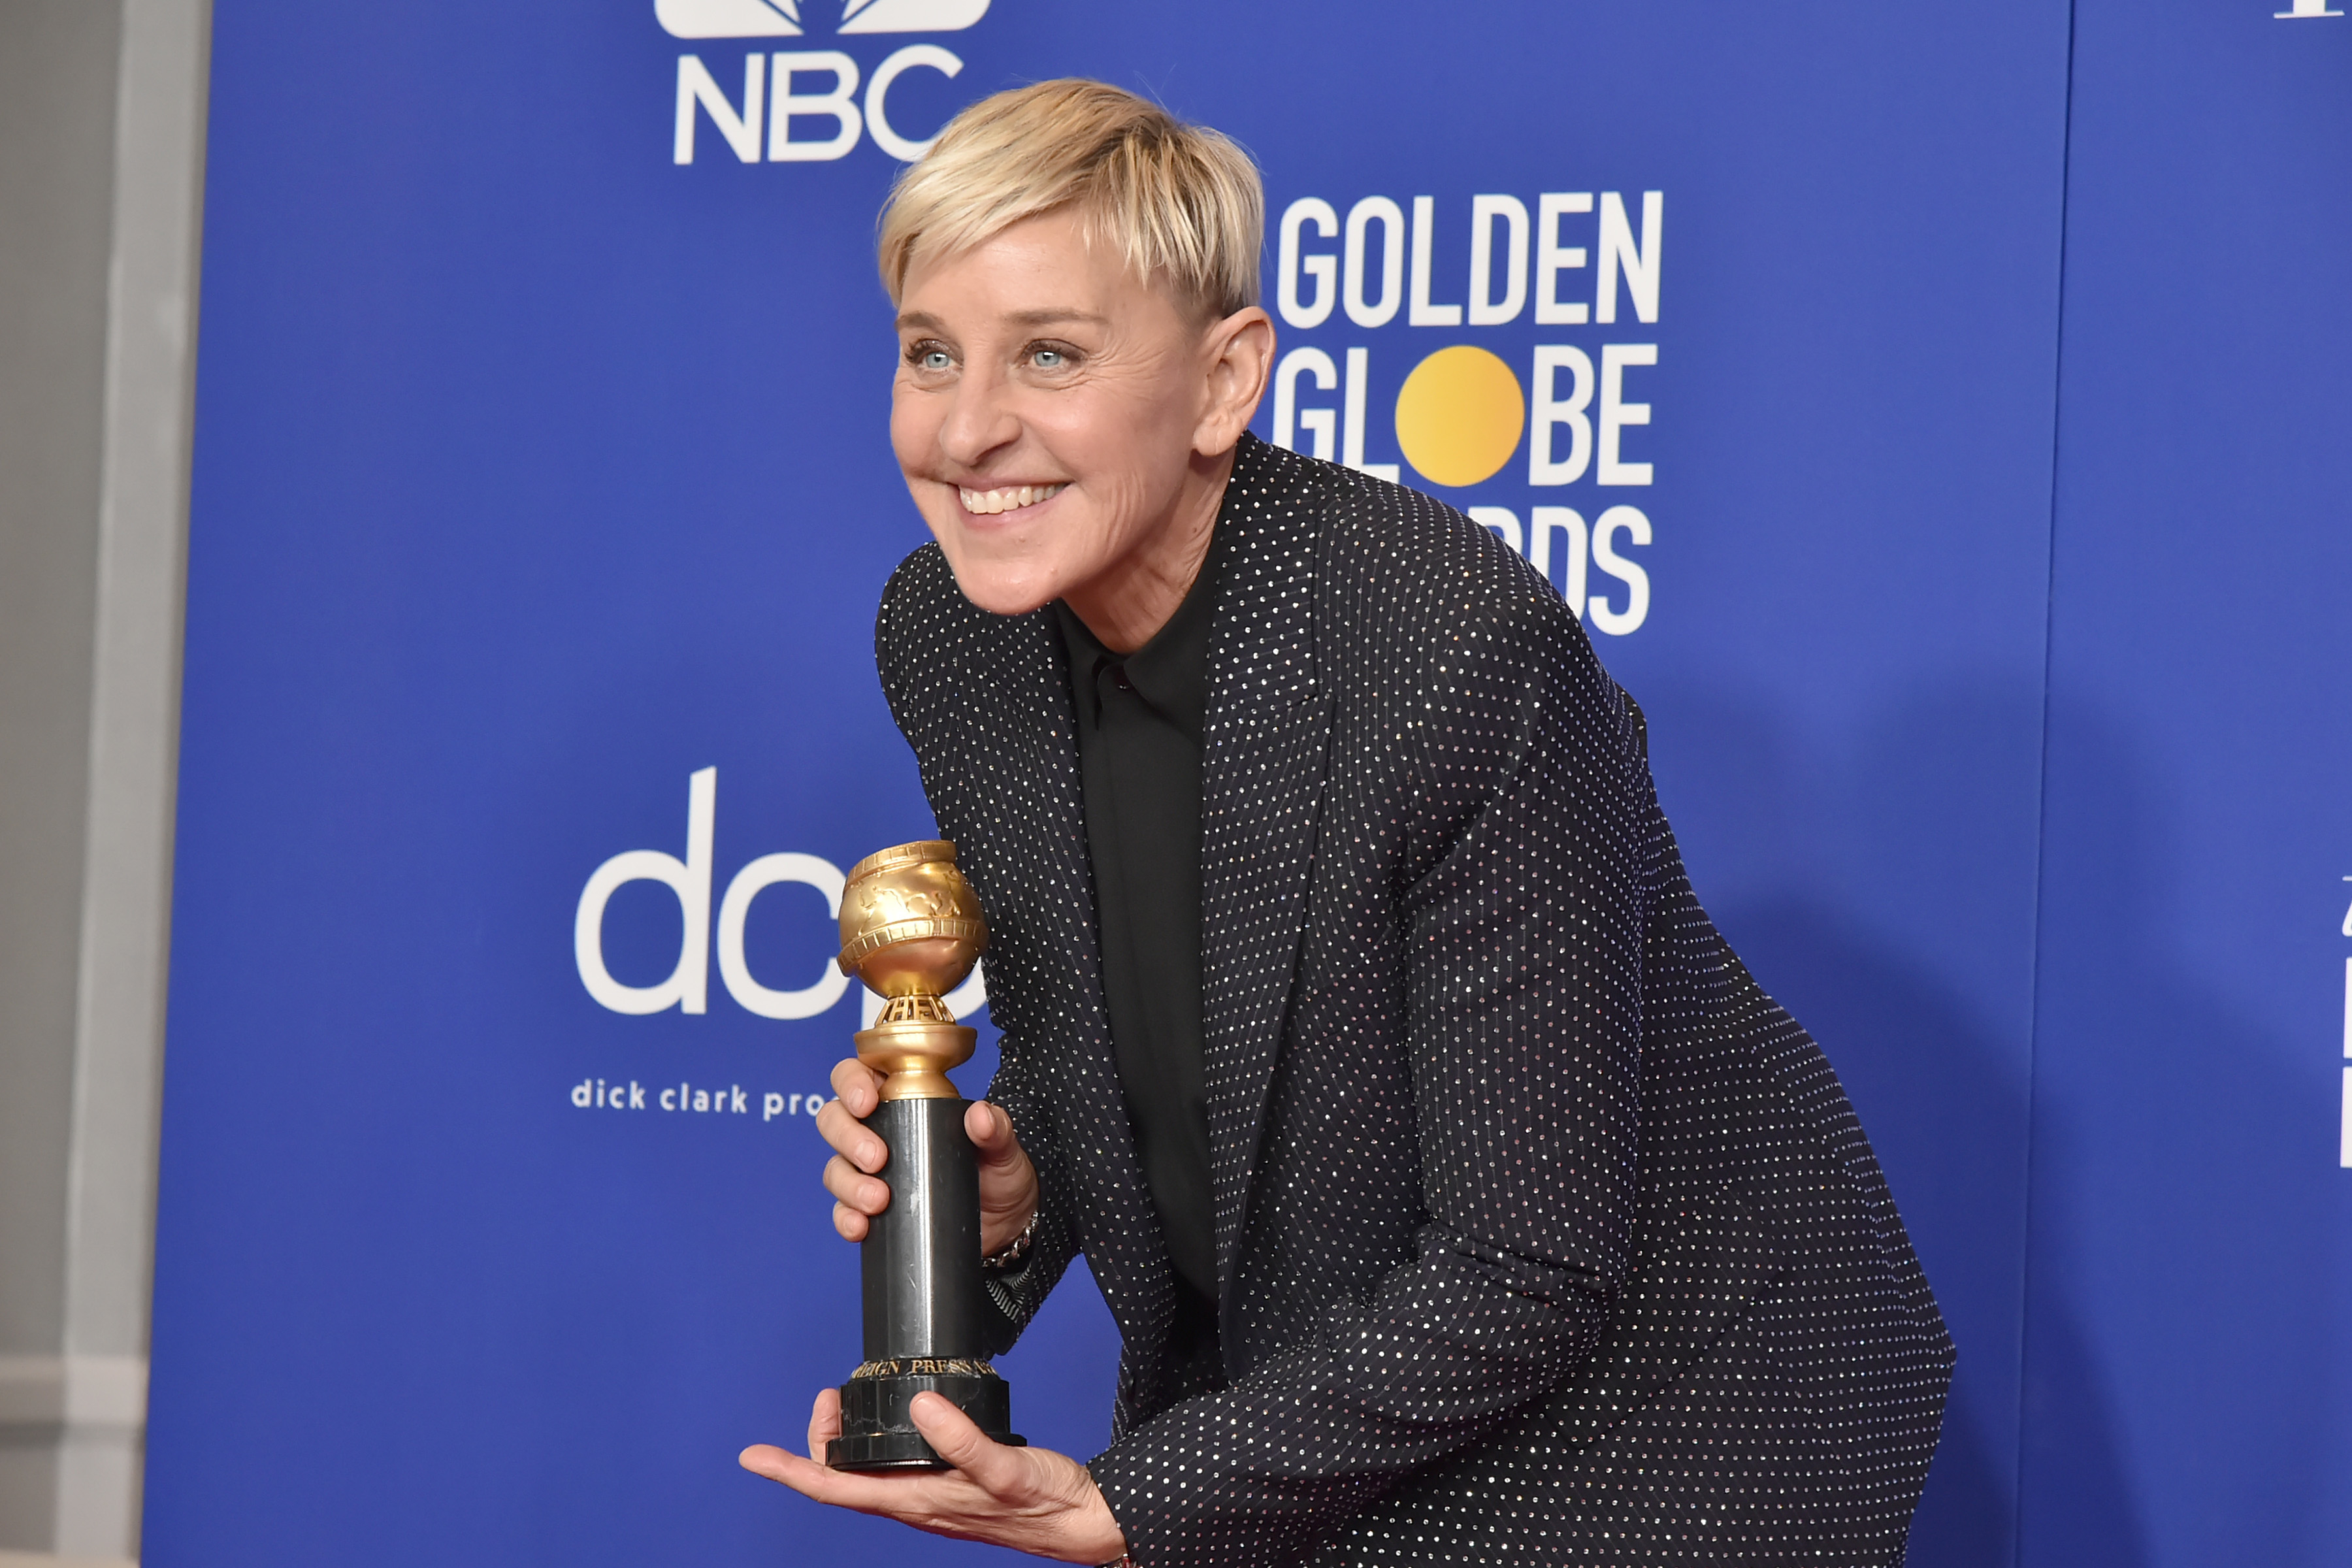 Ellen DeGeneres posing with a Golden Globe award, wearing a dotted suit